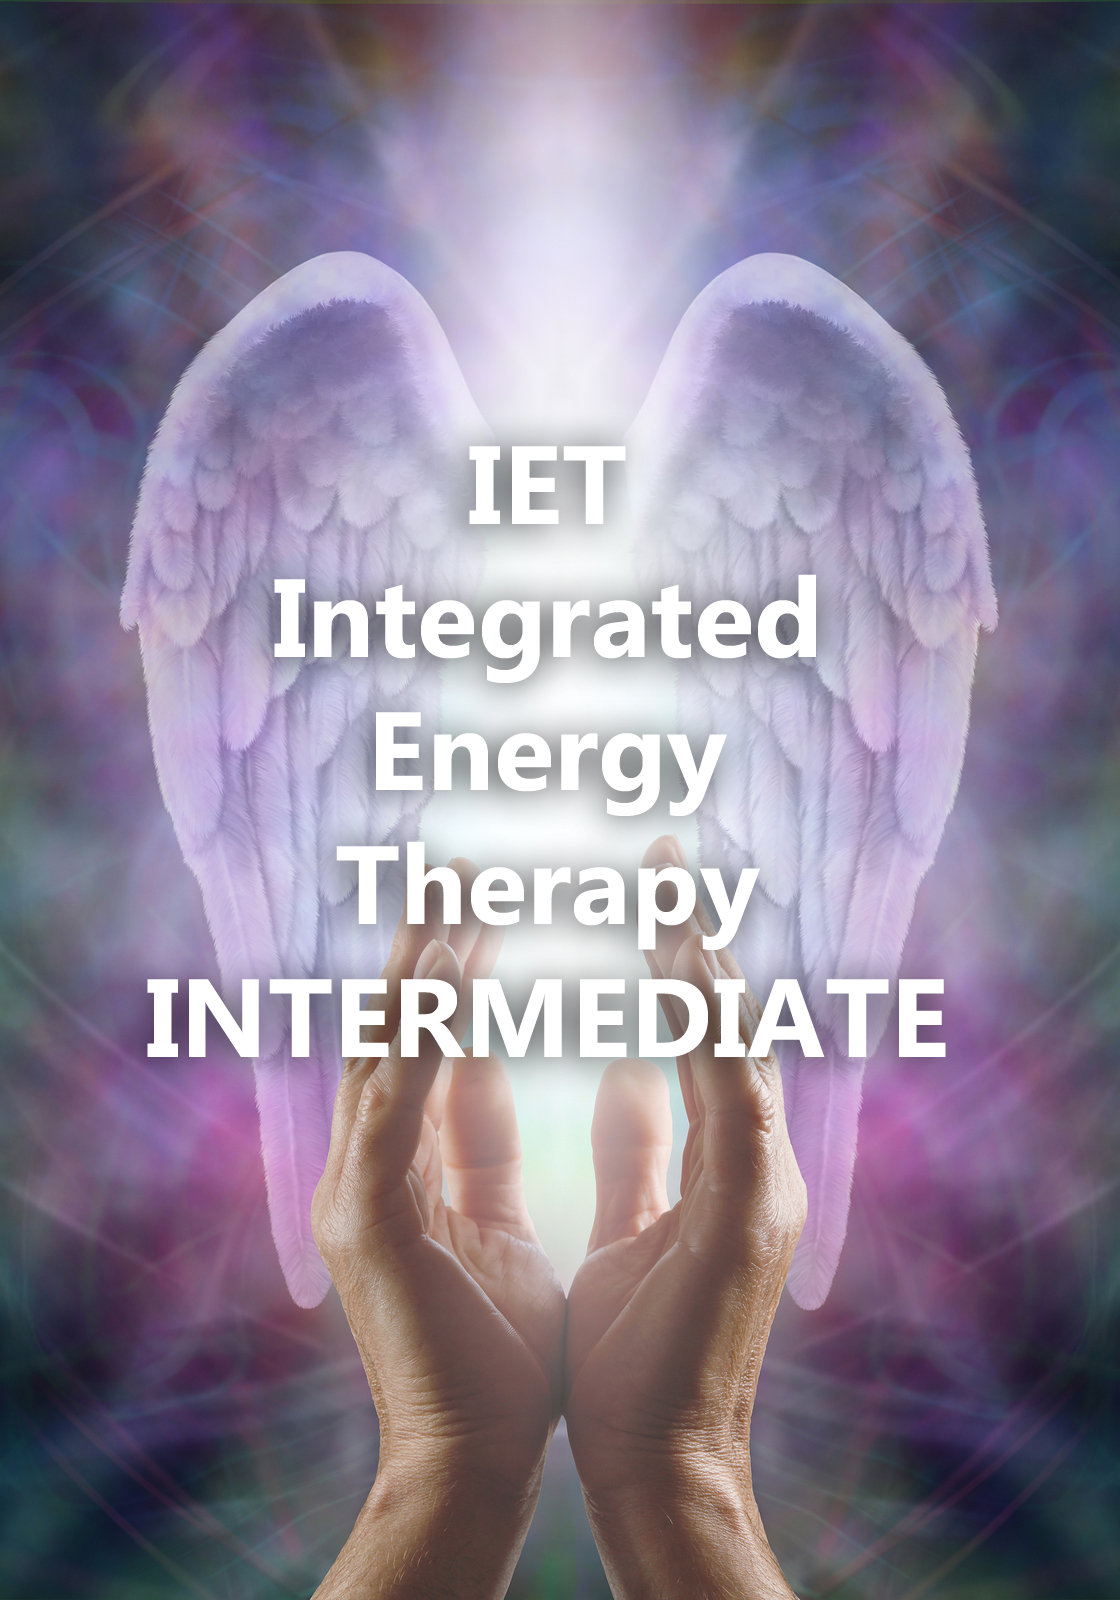 IET Energy Healing 2 intermediate